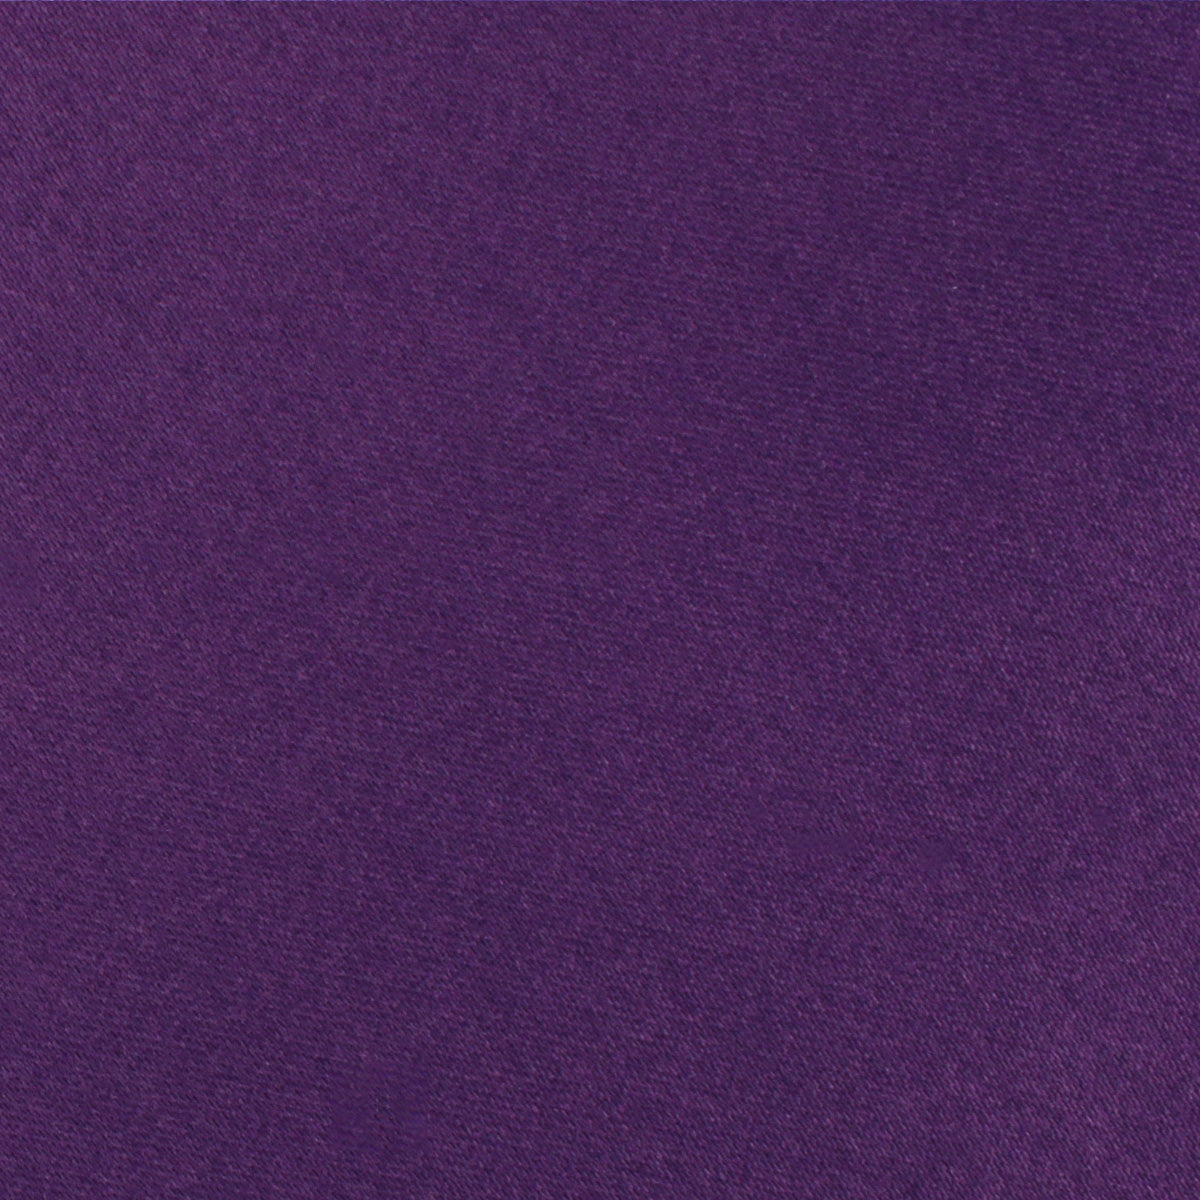 Eggplant Purple Satin Bow Tie Fabric